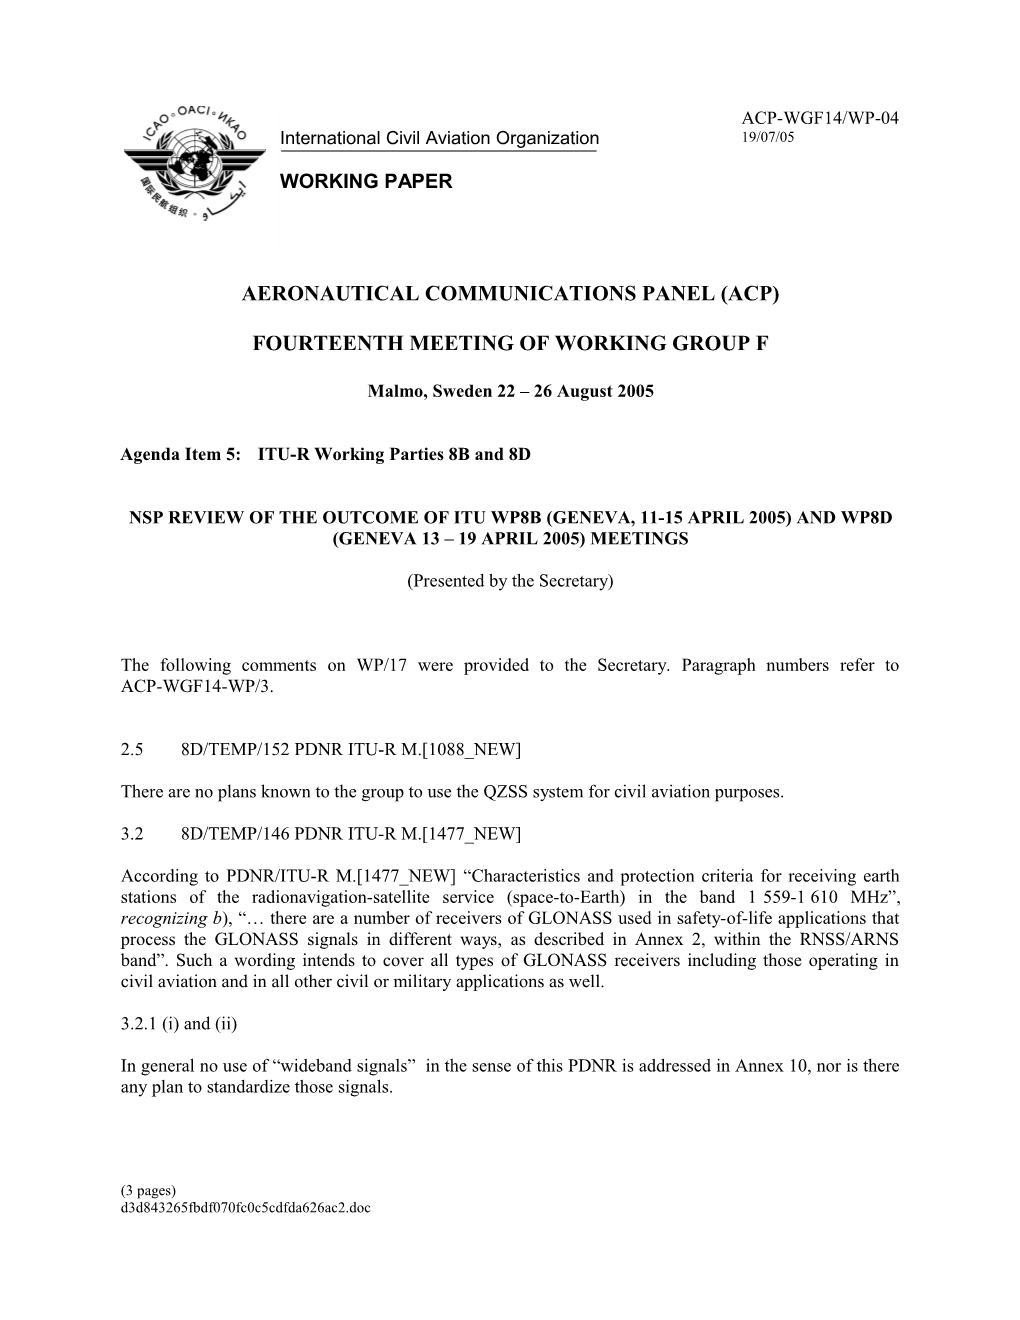 NSP Review of the Outcome of ITU WP8B (Geneva, 11-15 April 2005) and WP8D (Geneva, 13-19